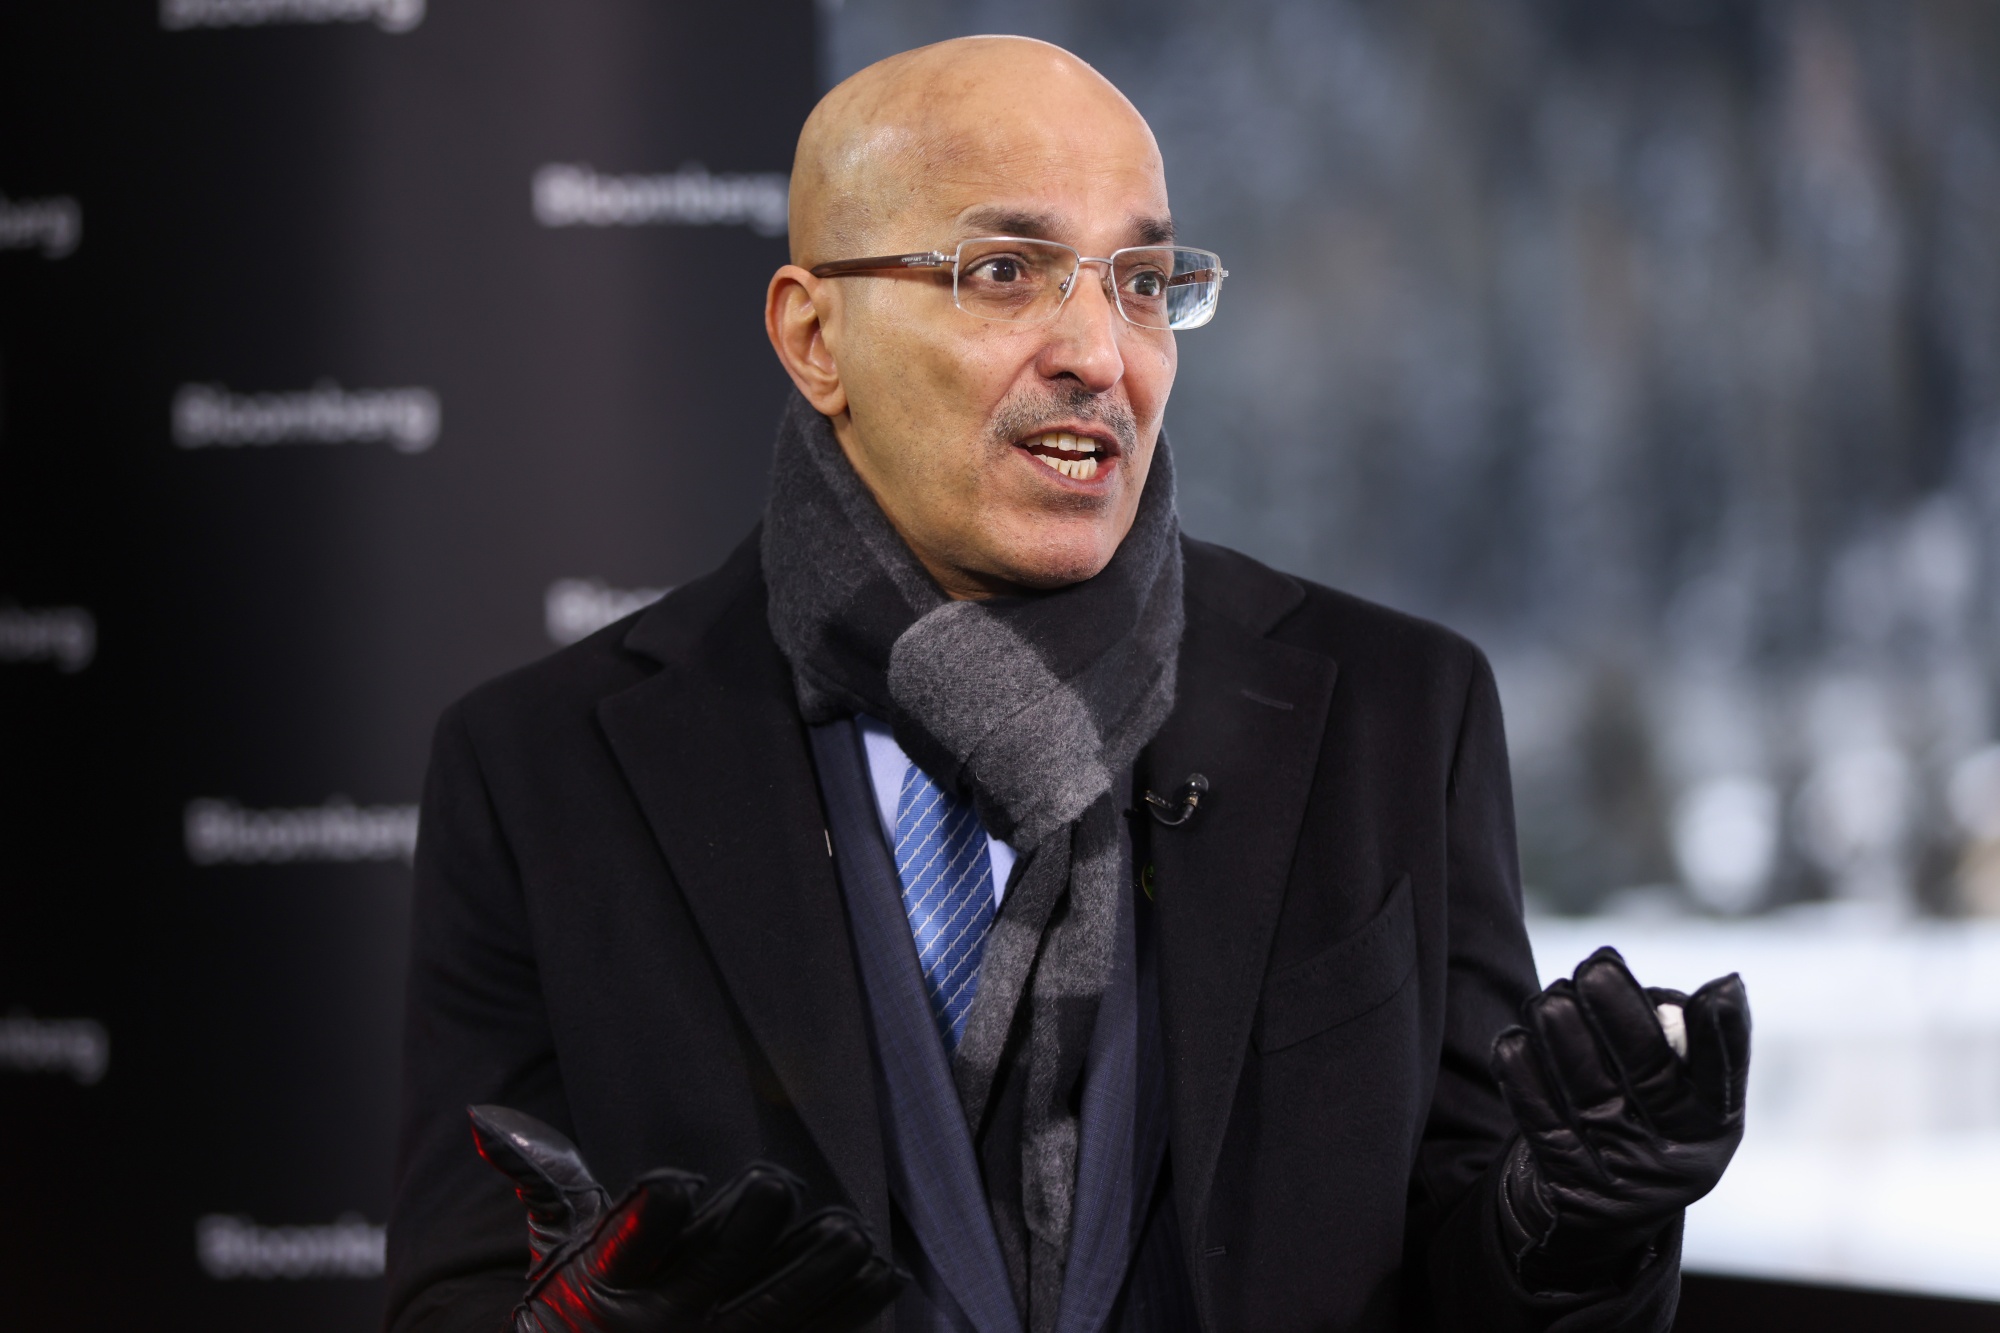 Mohammed Al-Jadaan, in Davos, Switzerland, on Jan. 17.